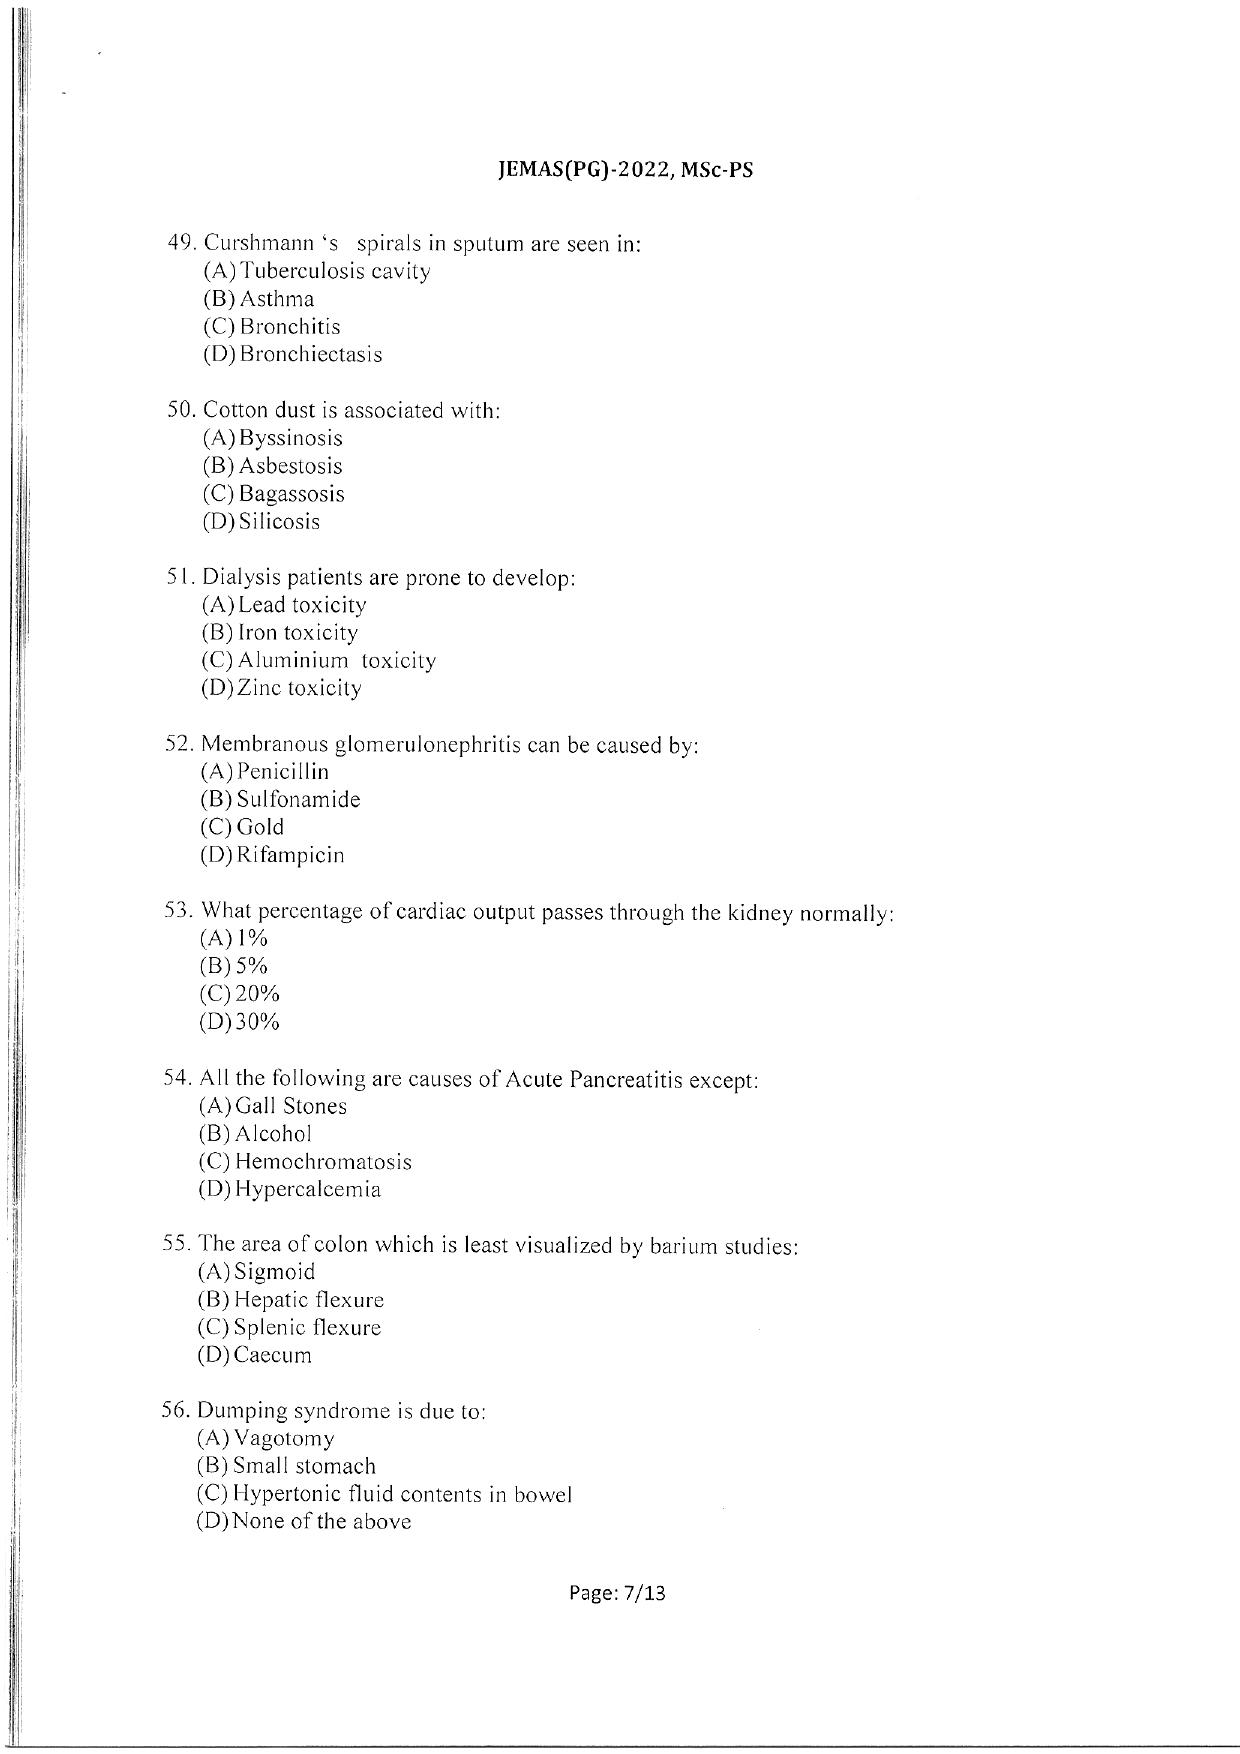 WBJEEB JEMAS (PG) 2022 MSc PS Question Paper - Page 9